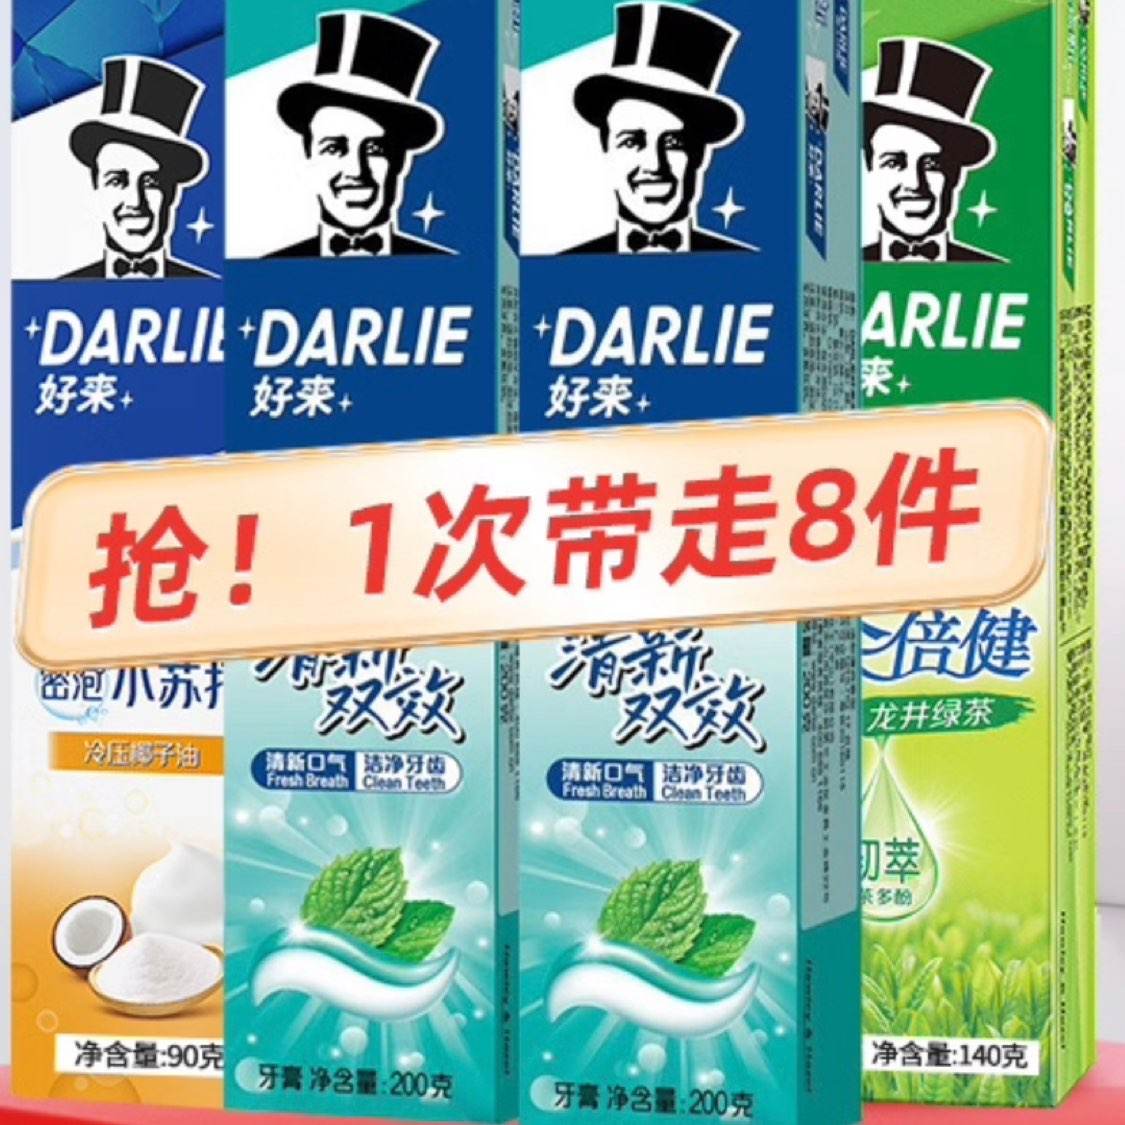 PLUS会员:好来（DARLIE）黑人牙膏 清新多效630g/4支+赠旅行装40g*2+牙刷*2 32.55元